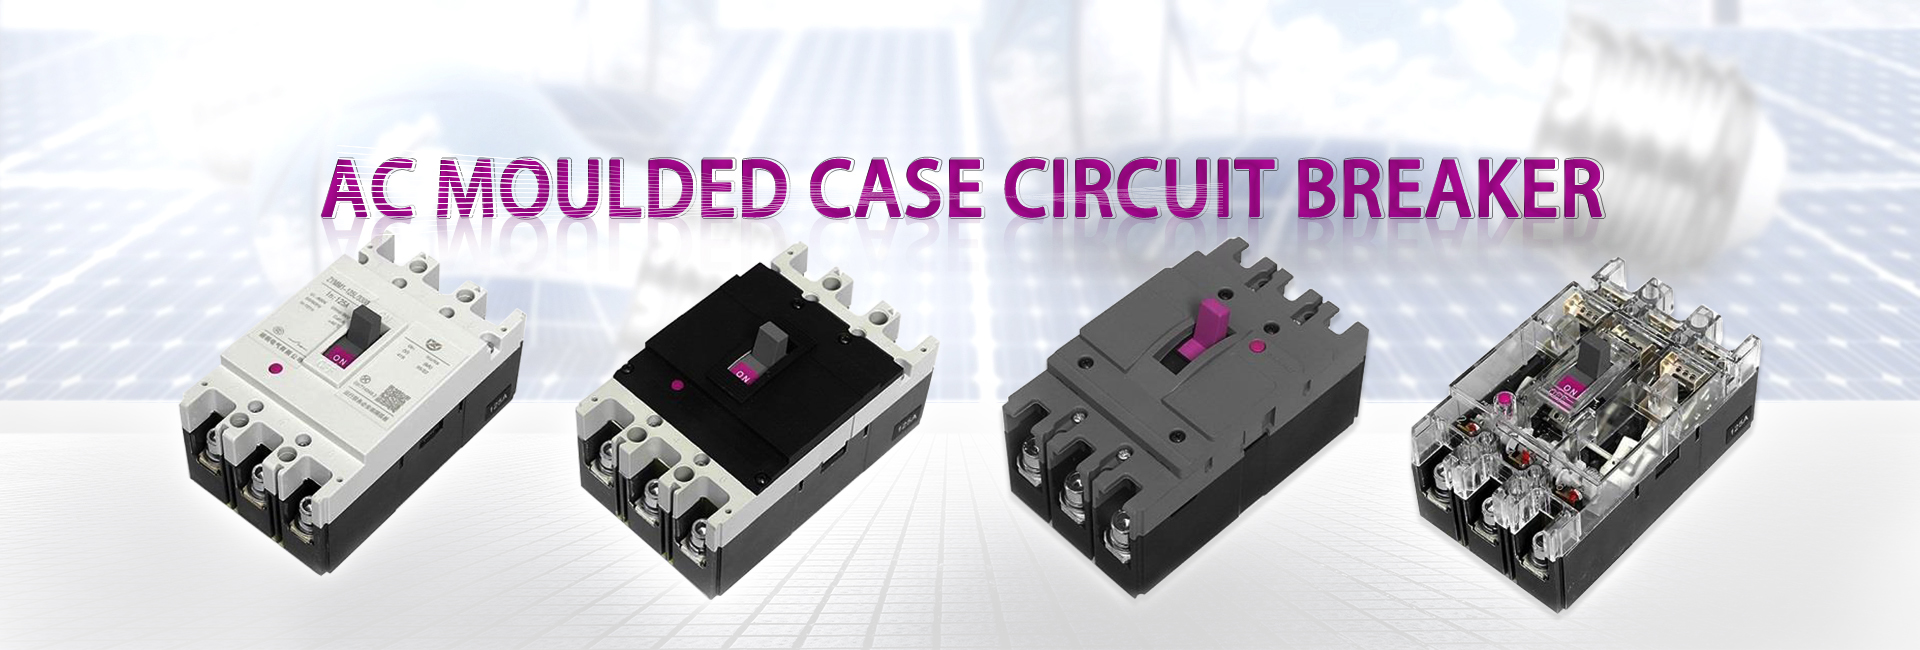 Ac Moulded Case Circuit Breaker